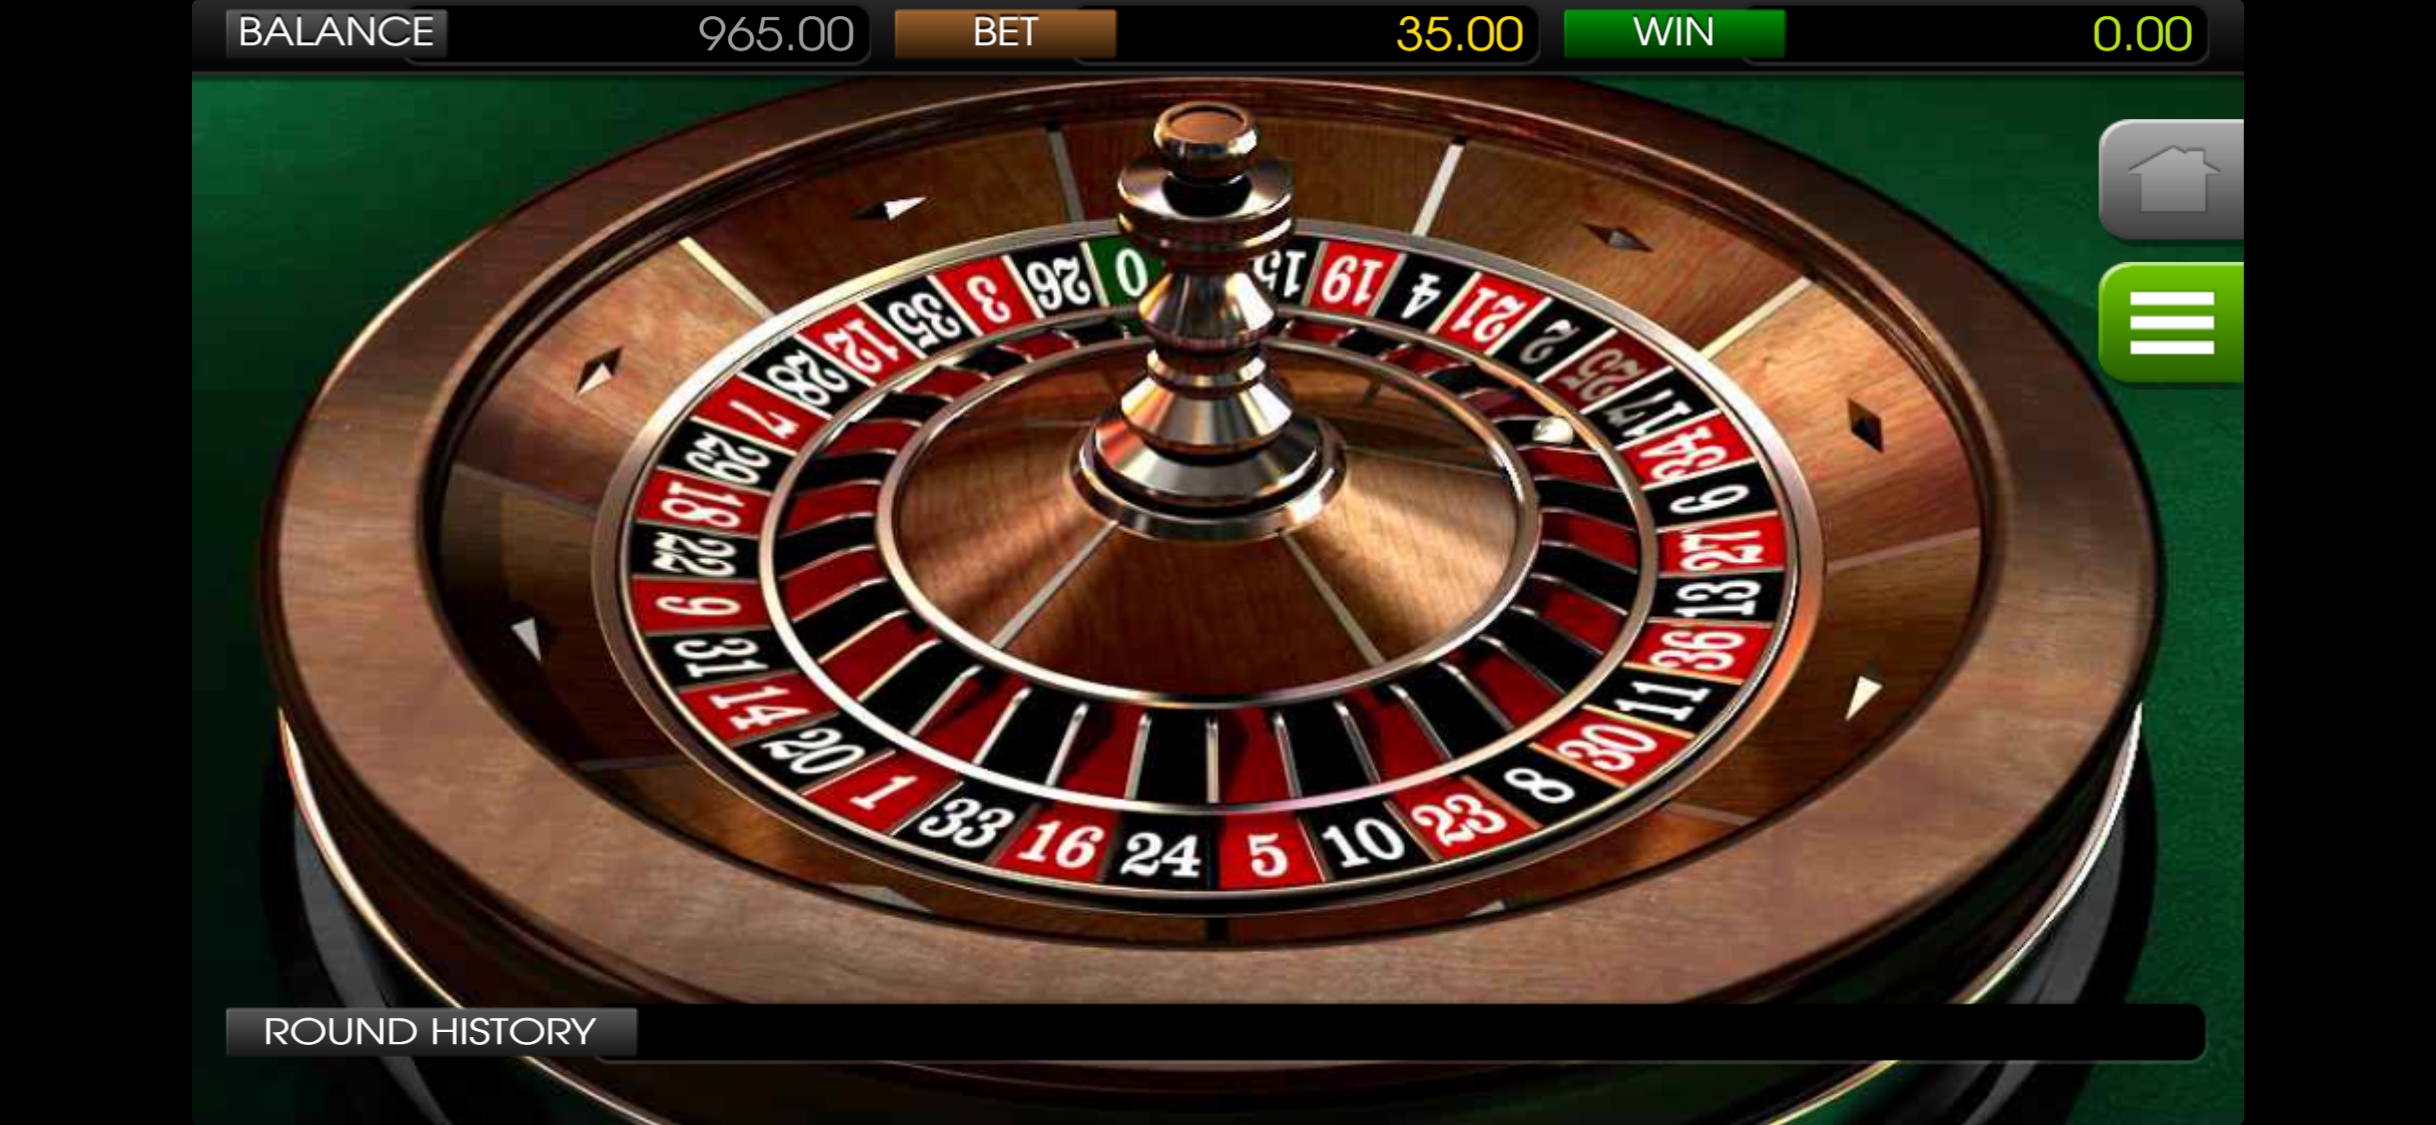 MaChance Casino Mobile Casino Games Review